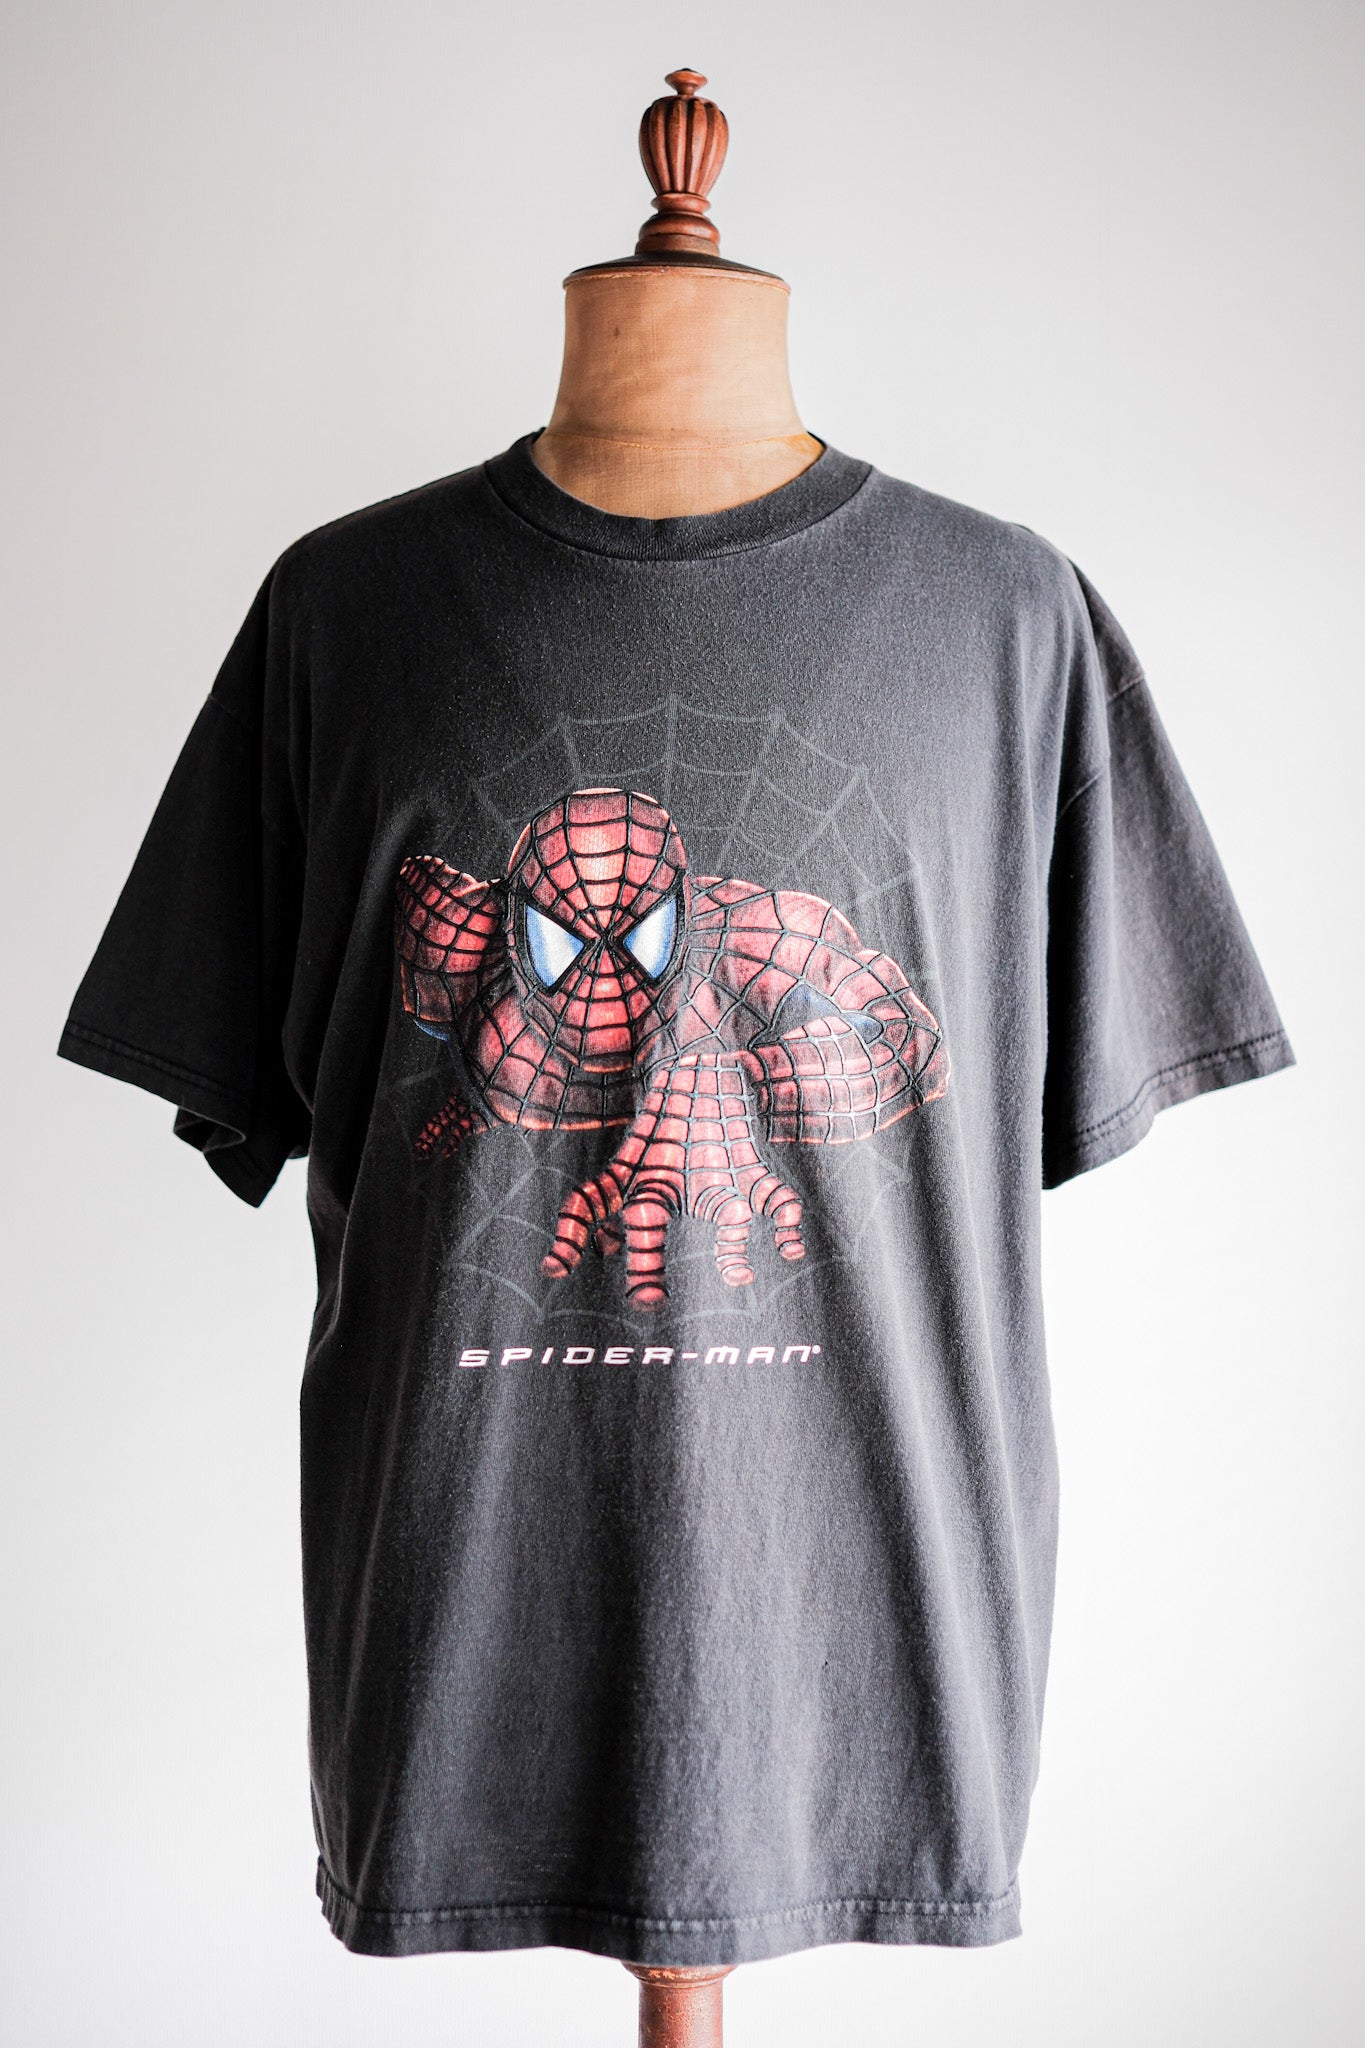 【~00's】Vintage Movie Print T-shirt Size.XL "Spider-Man" "Made in U.S.A."